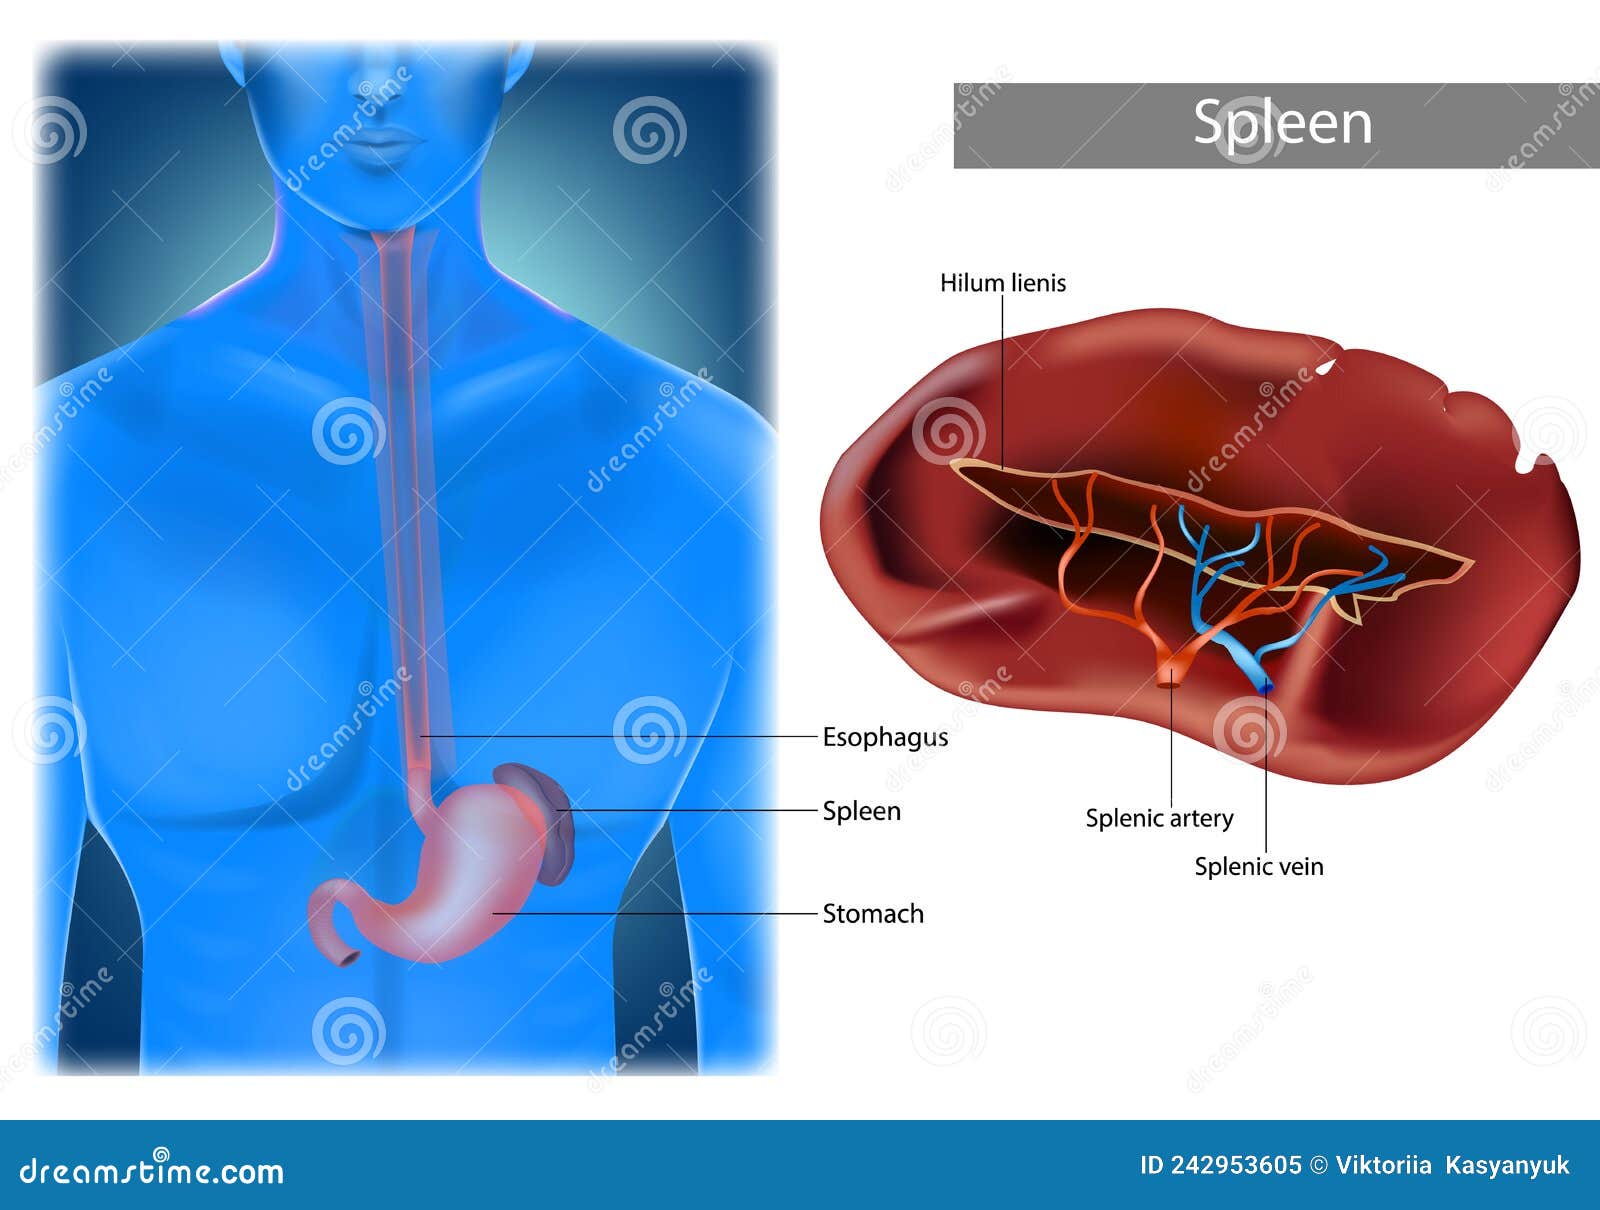 Spleen Diagram Human Body